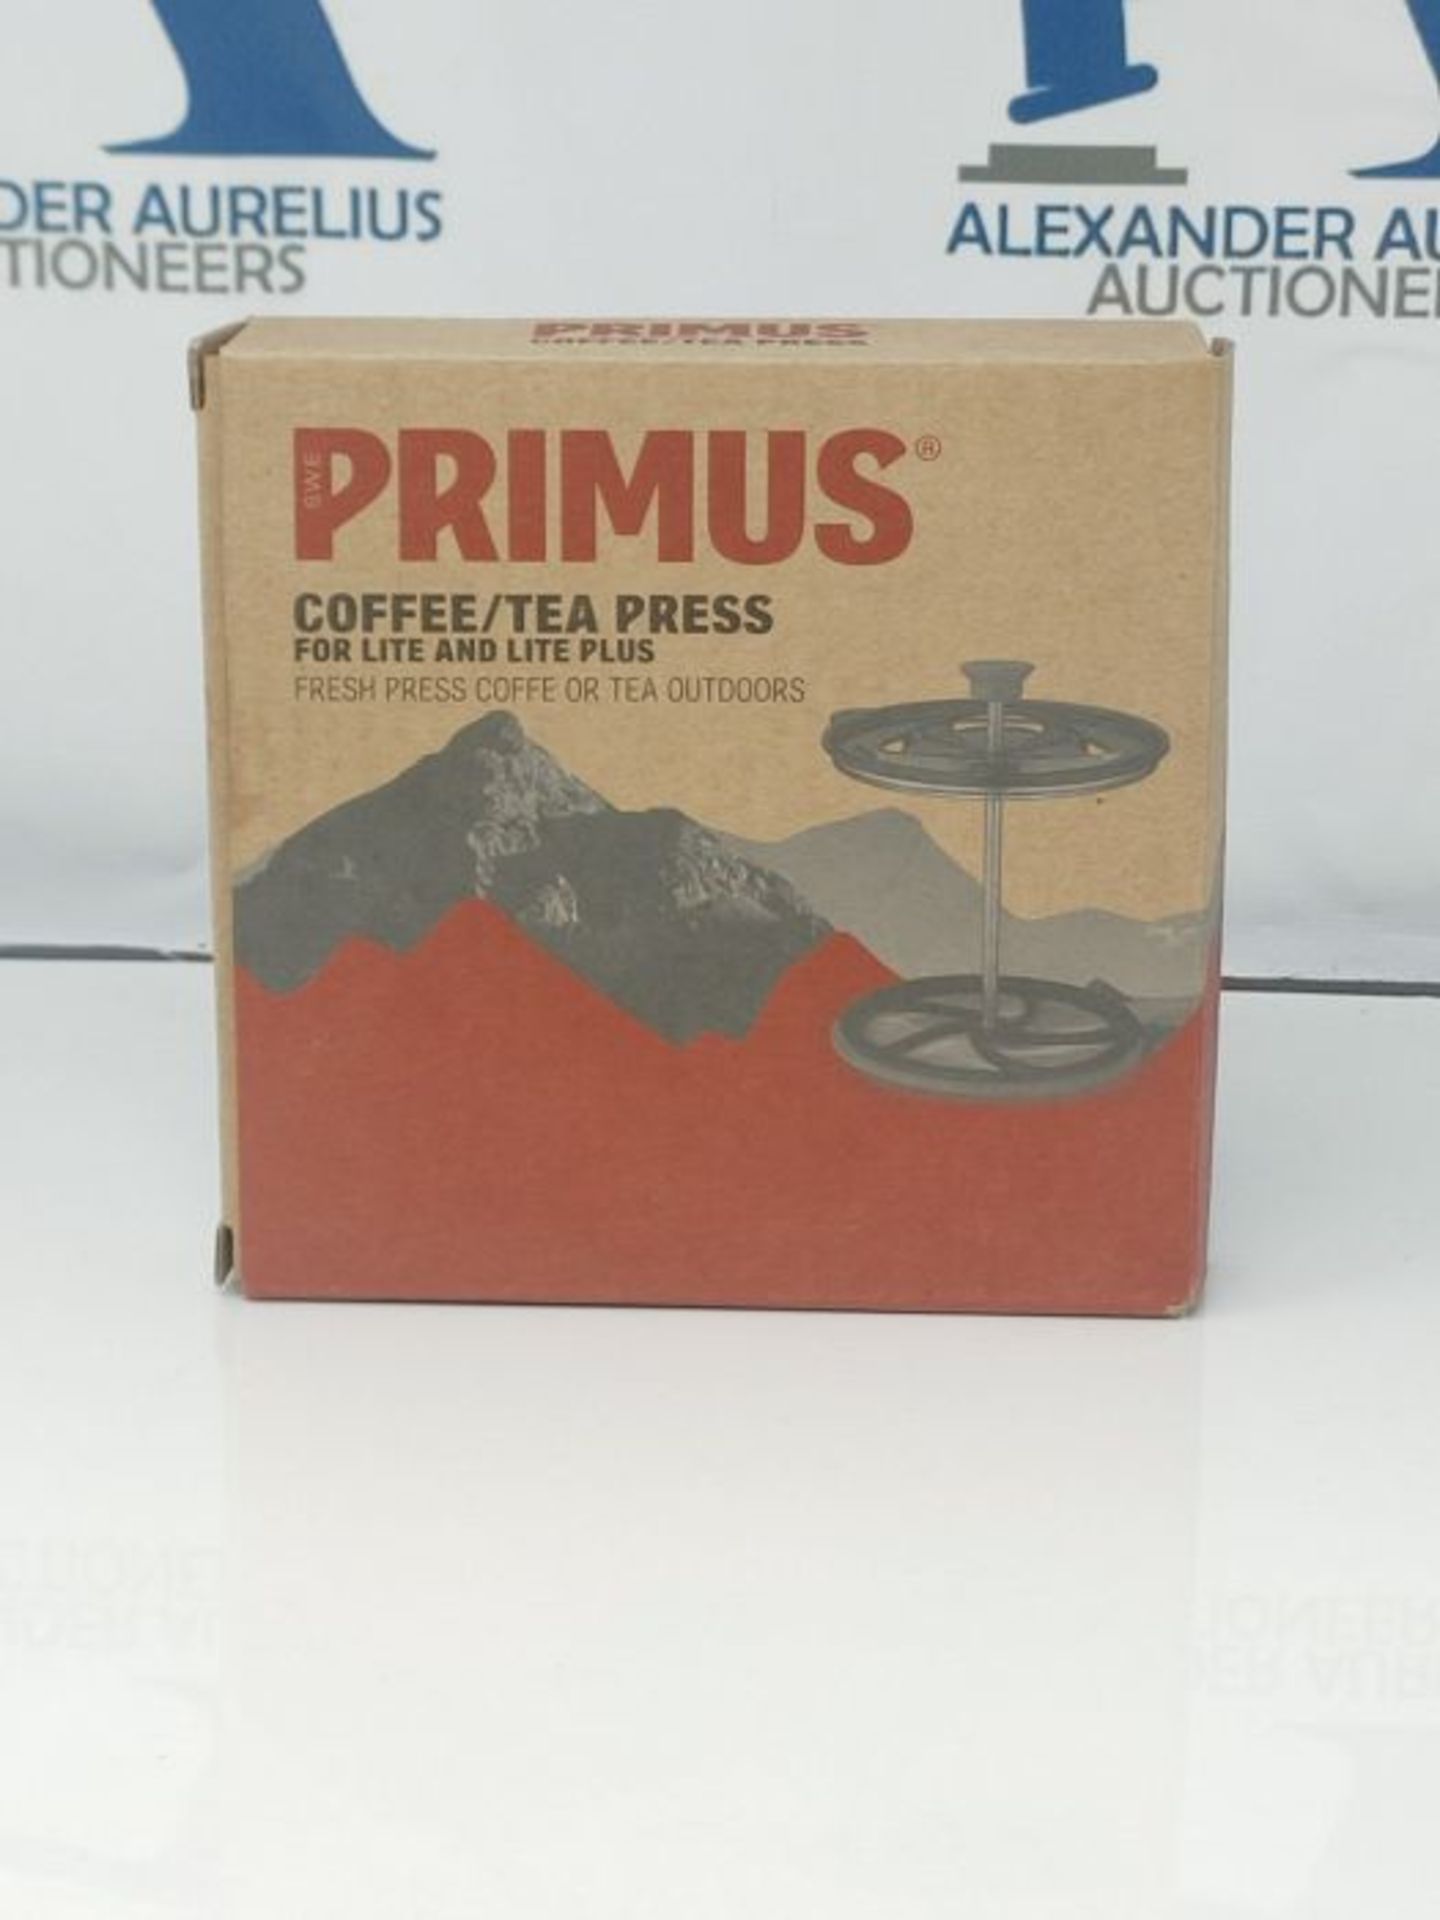 Primus Unisex - Adult Lite+ Cooker Set, Multi-Colour, One Size - Image 2 of 3